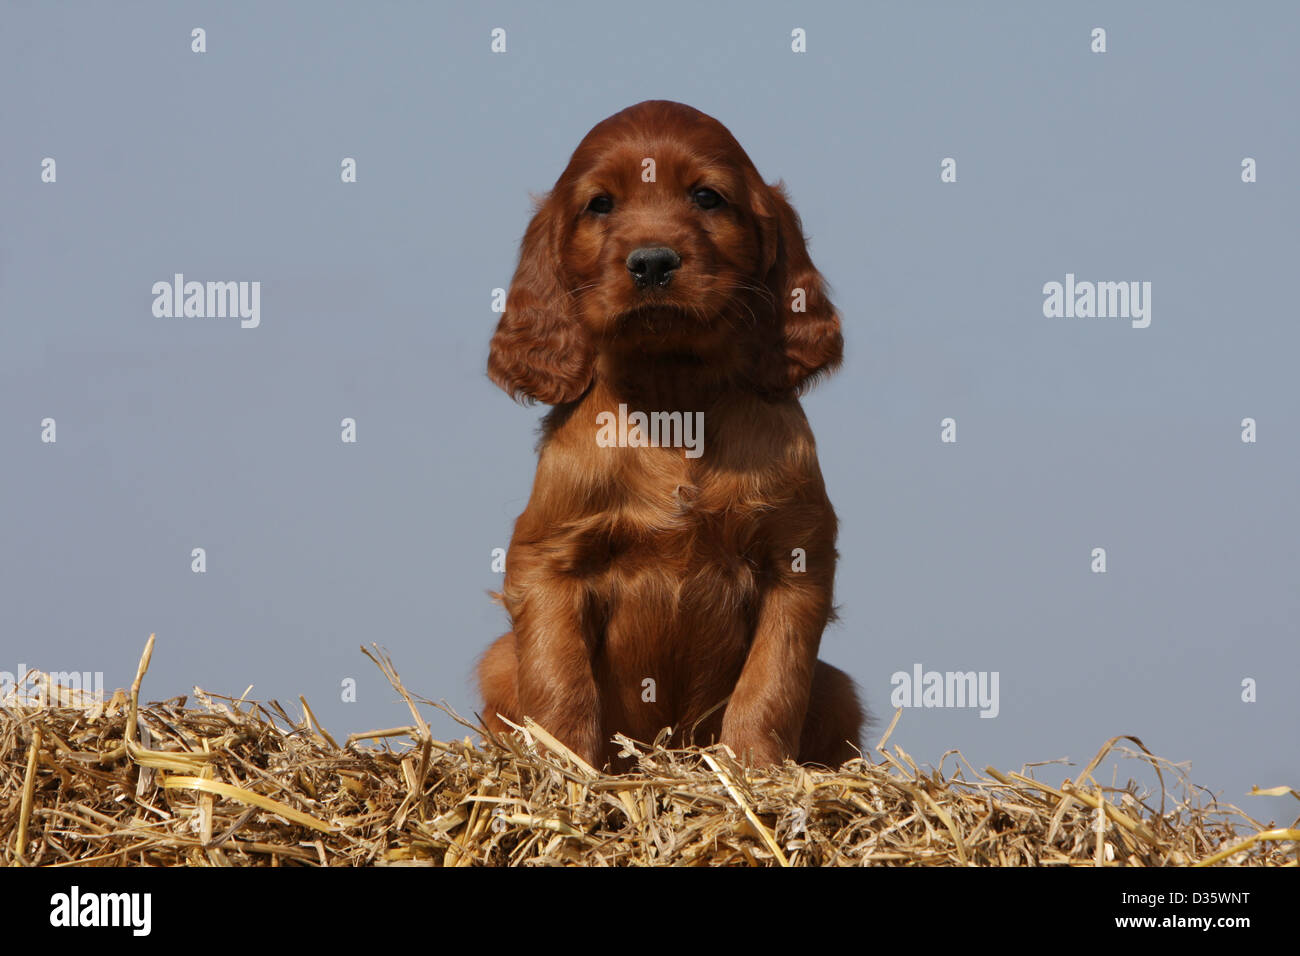 Dog Irish Setter / Red Setter puppy sitting on the straw Stock Photo